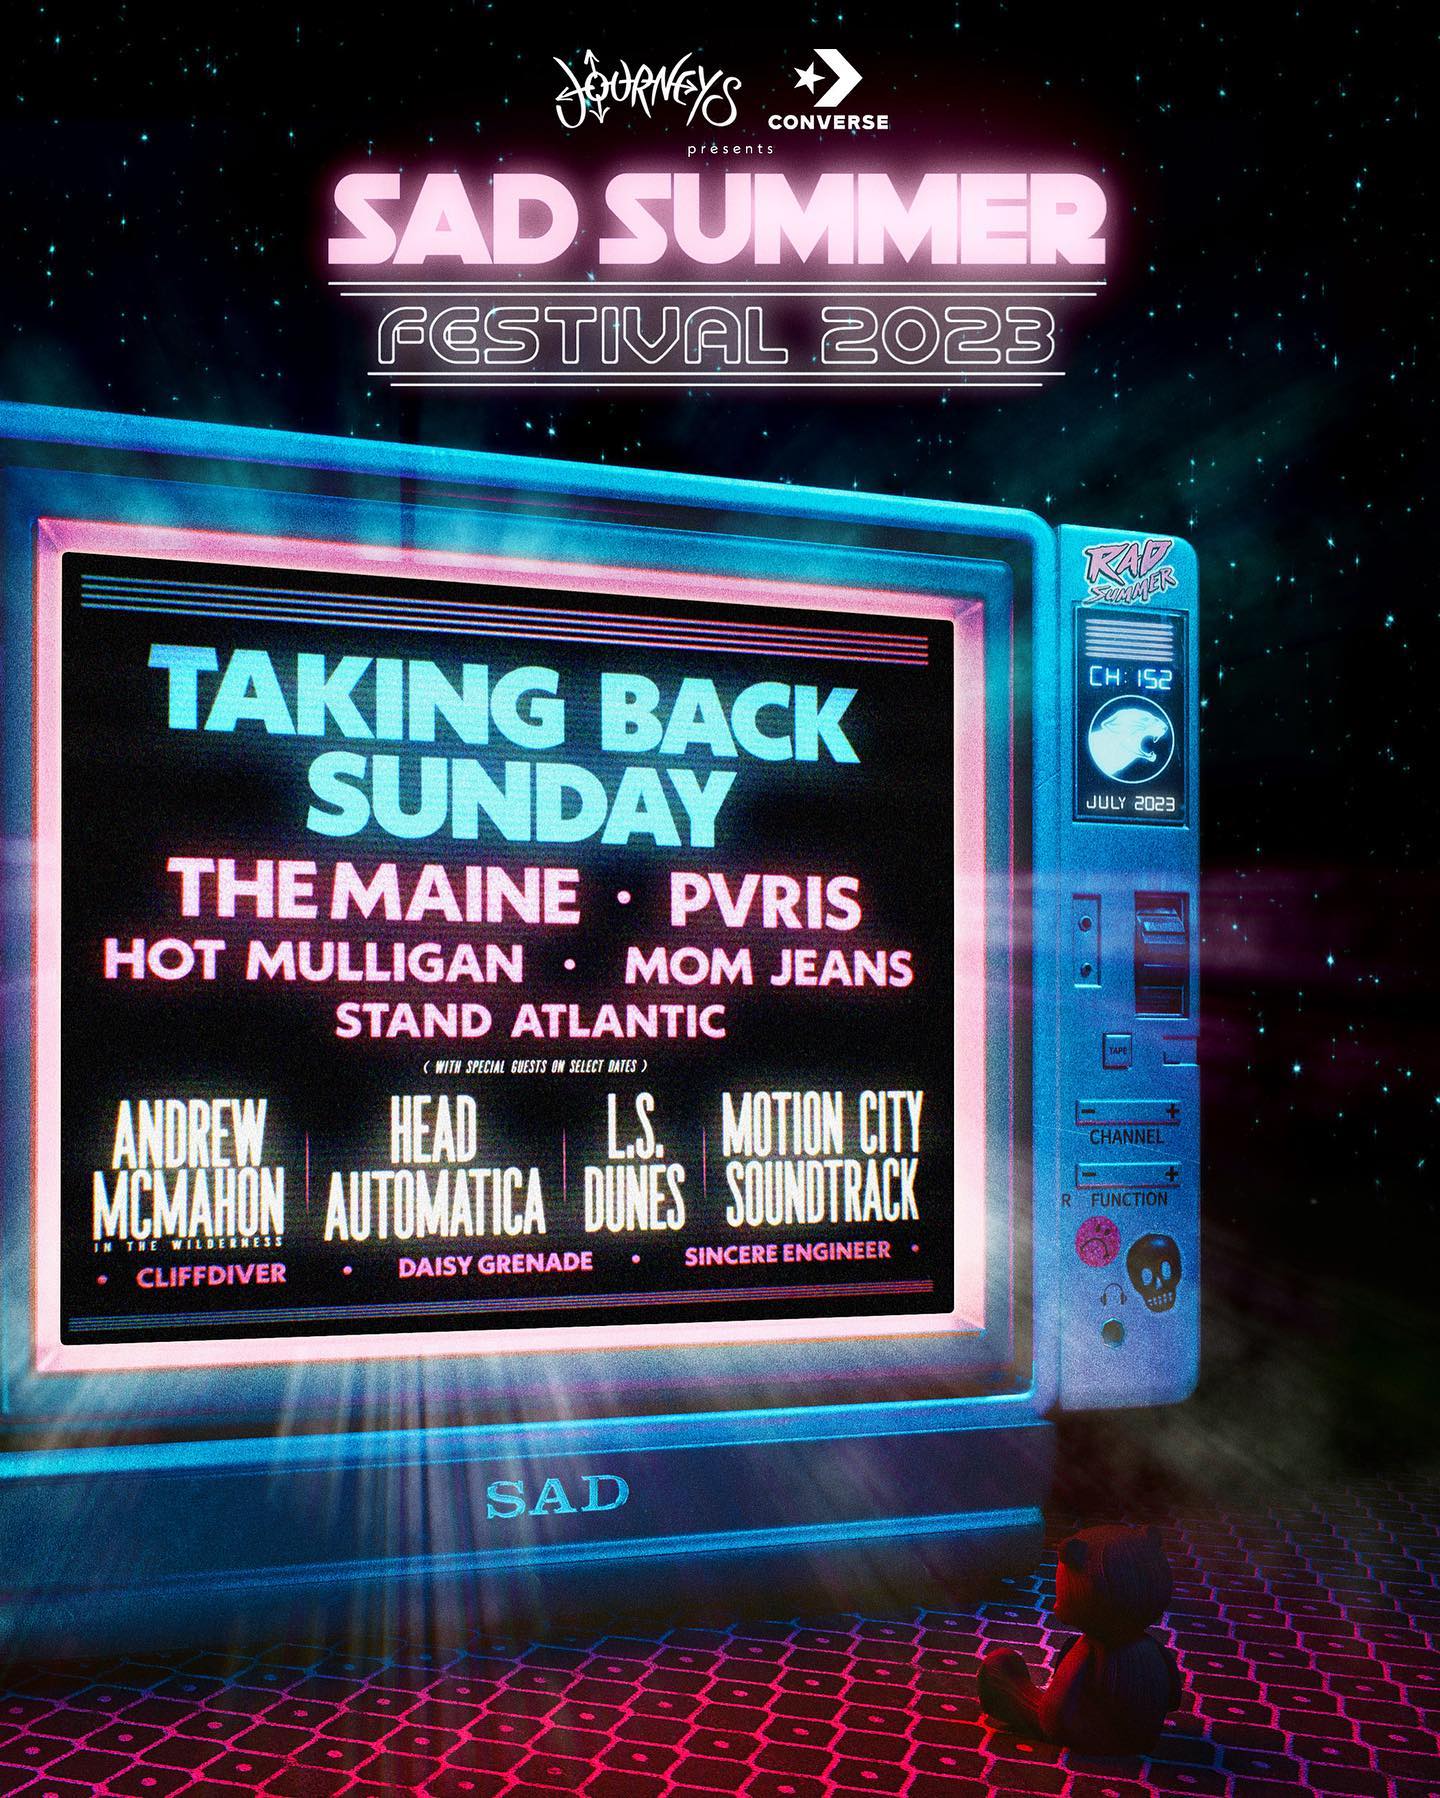 Sad Summer Festival: Taking Back Sunday, The Maine, Pvris, Hot Mulligan & Mom Jeans at Ascend Amphitheater